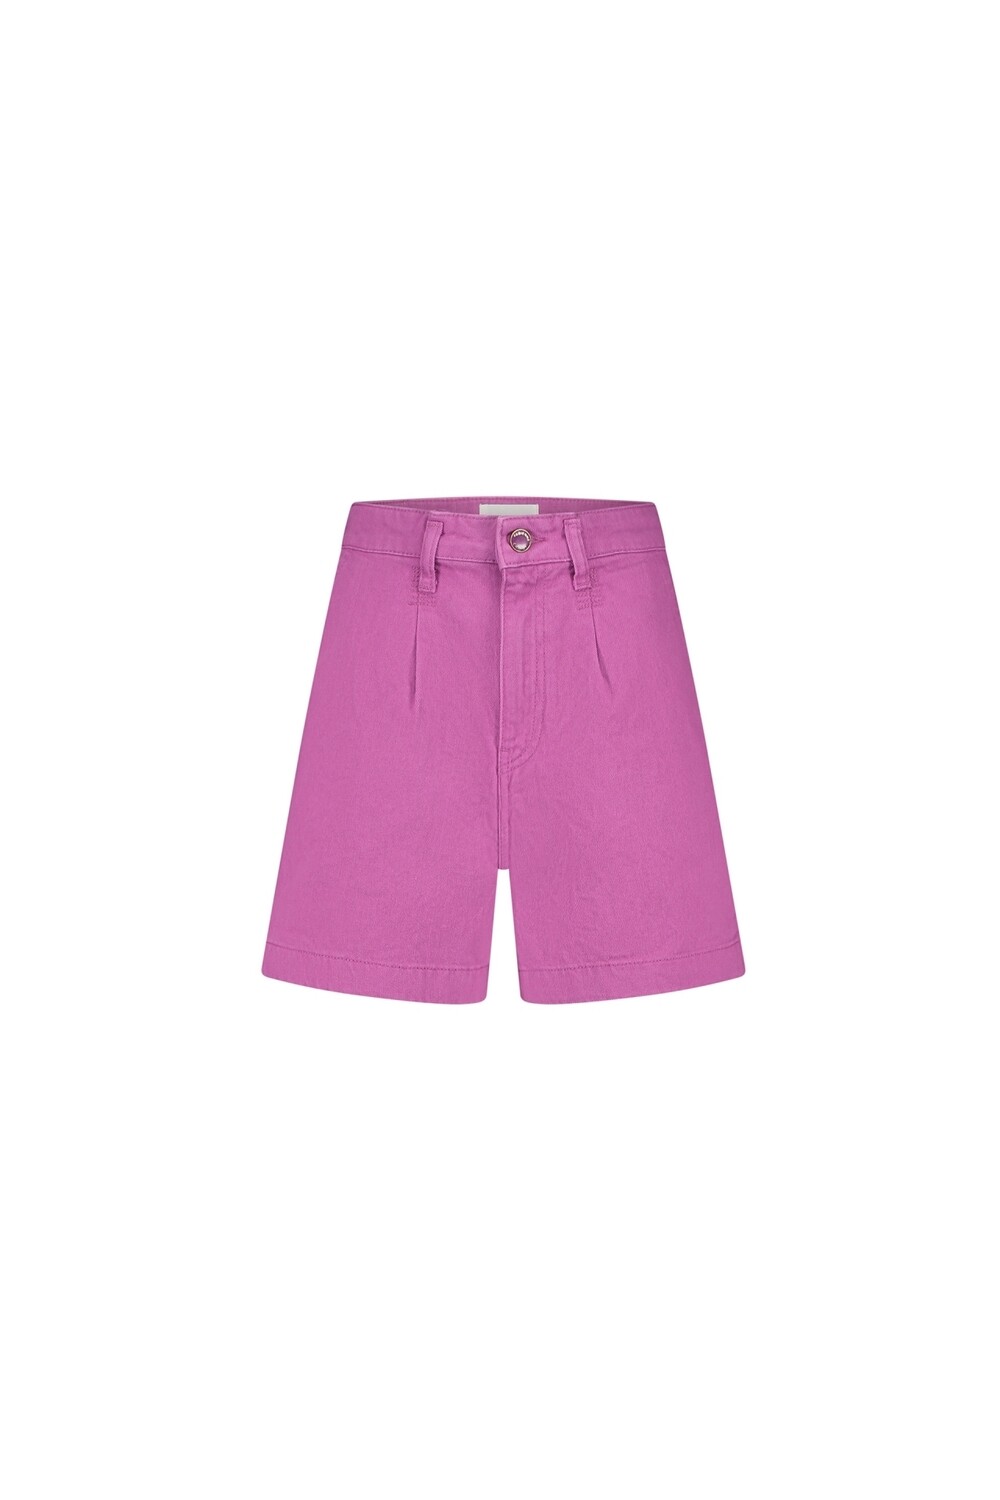 Fabienne Chapot foster shorts roze